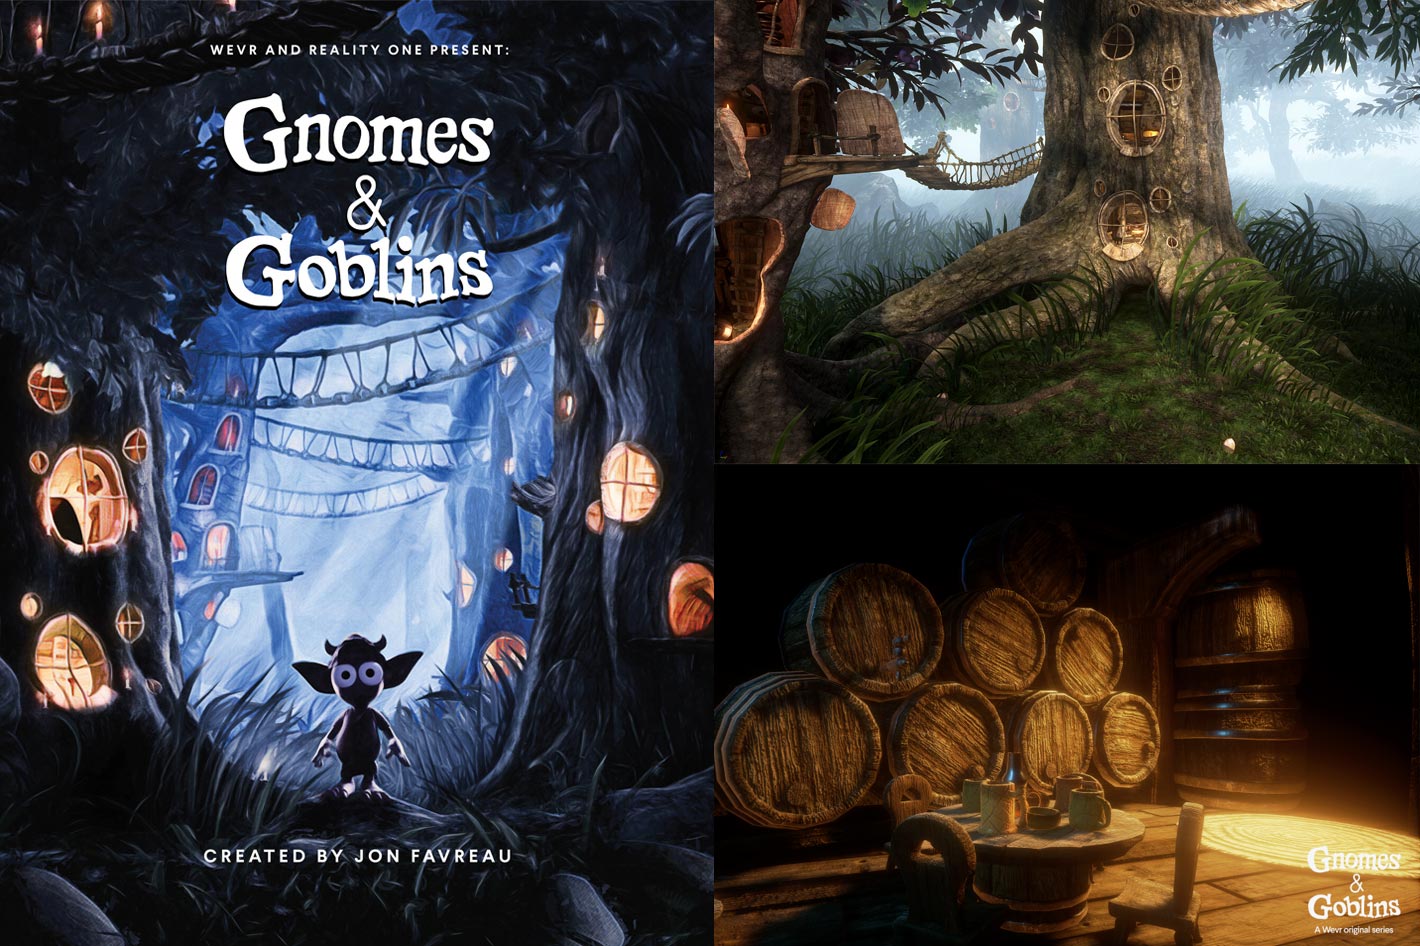 Gnomes & Goblins: Jon Favreau’s new creation